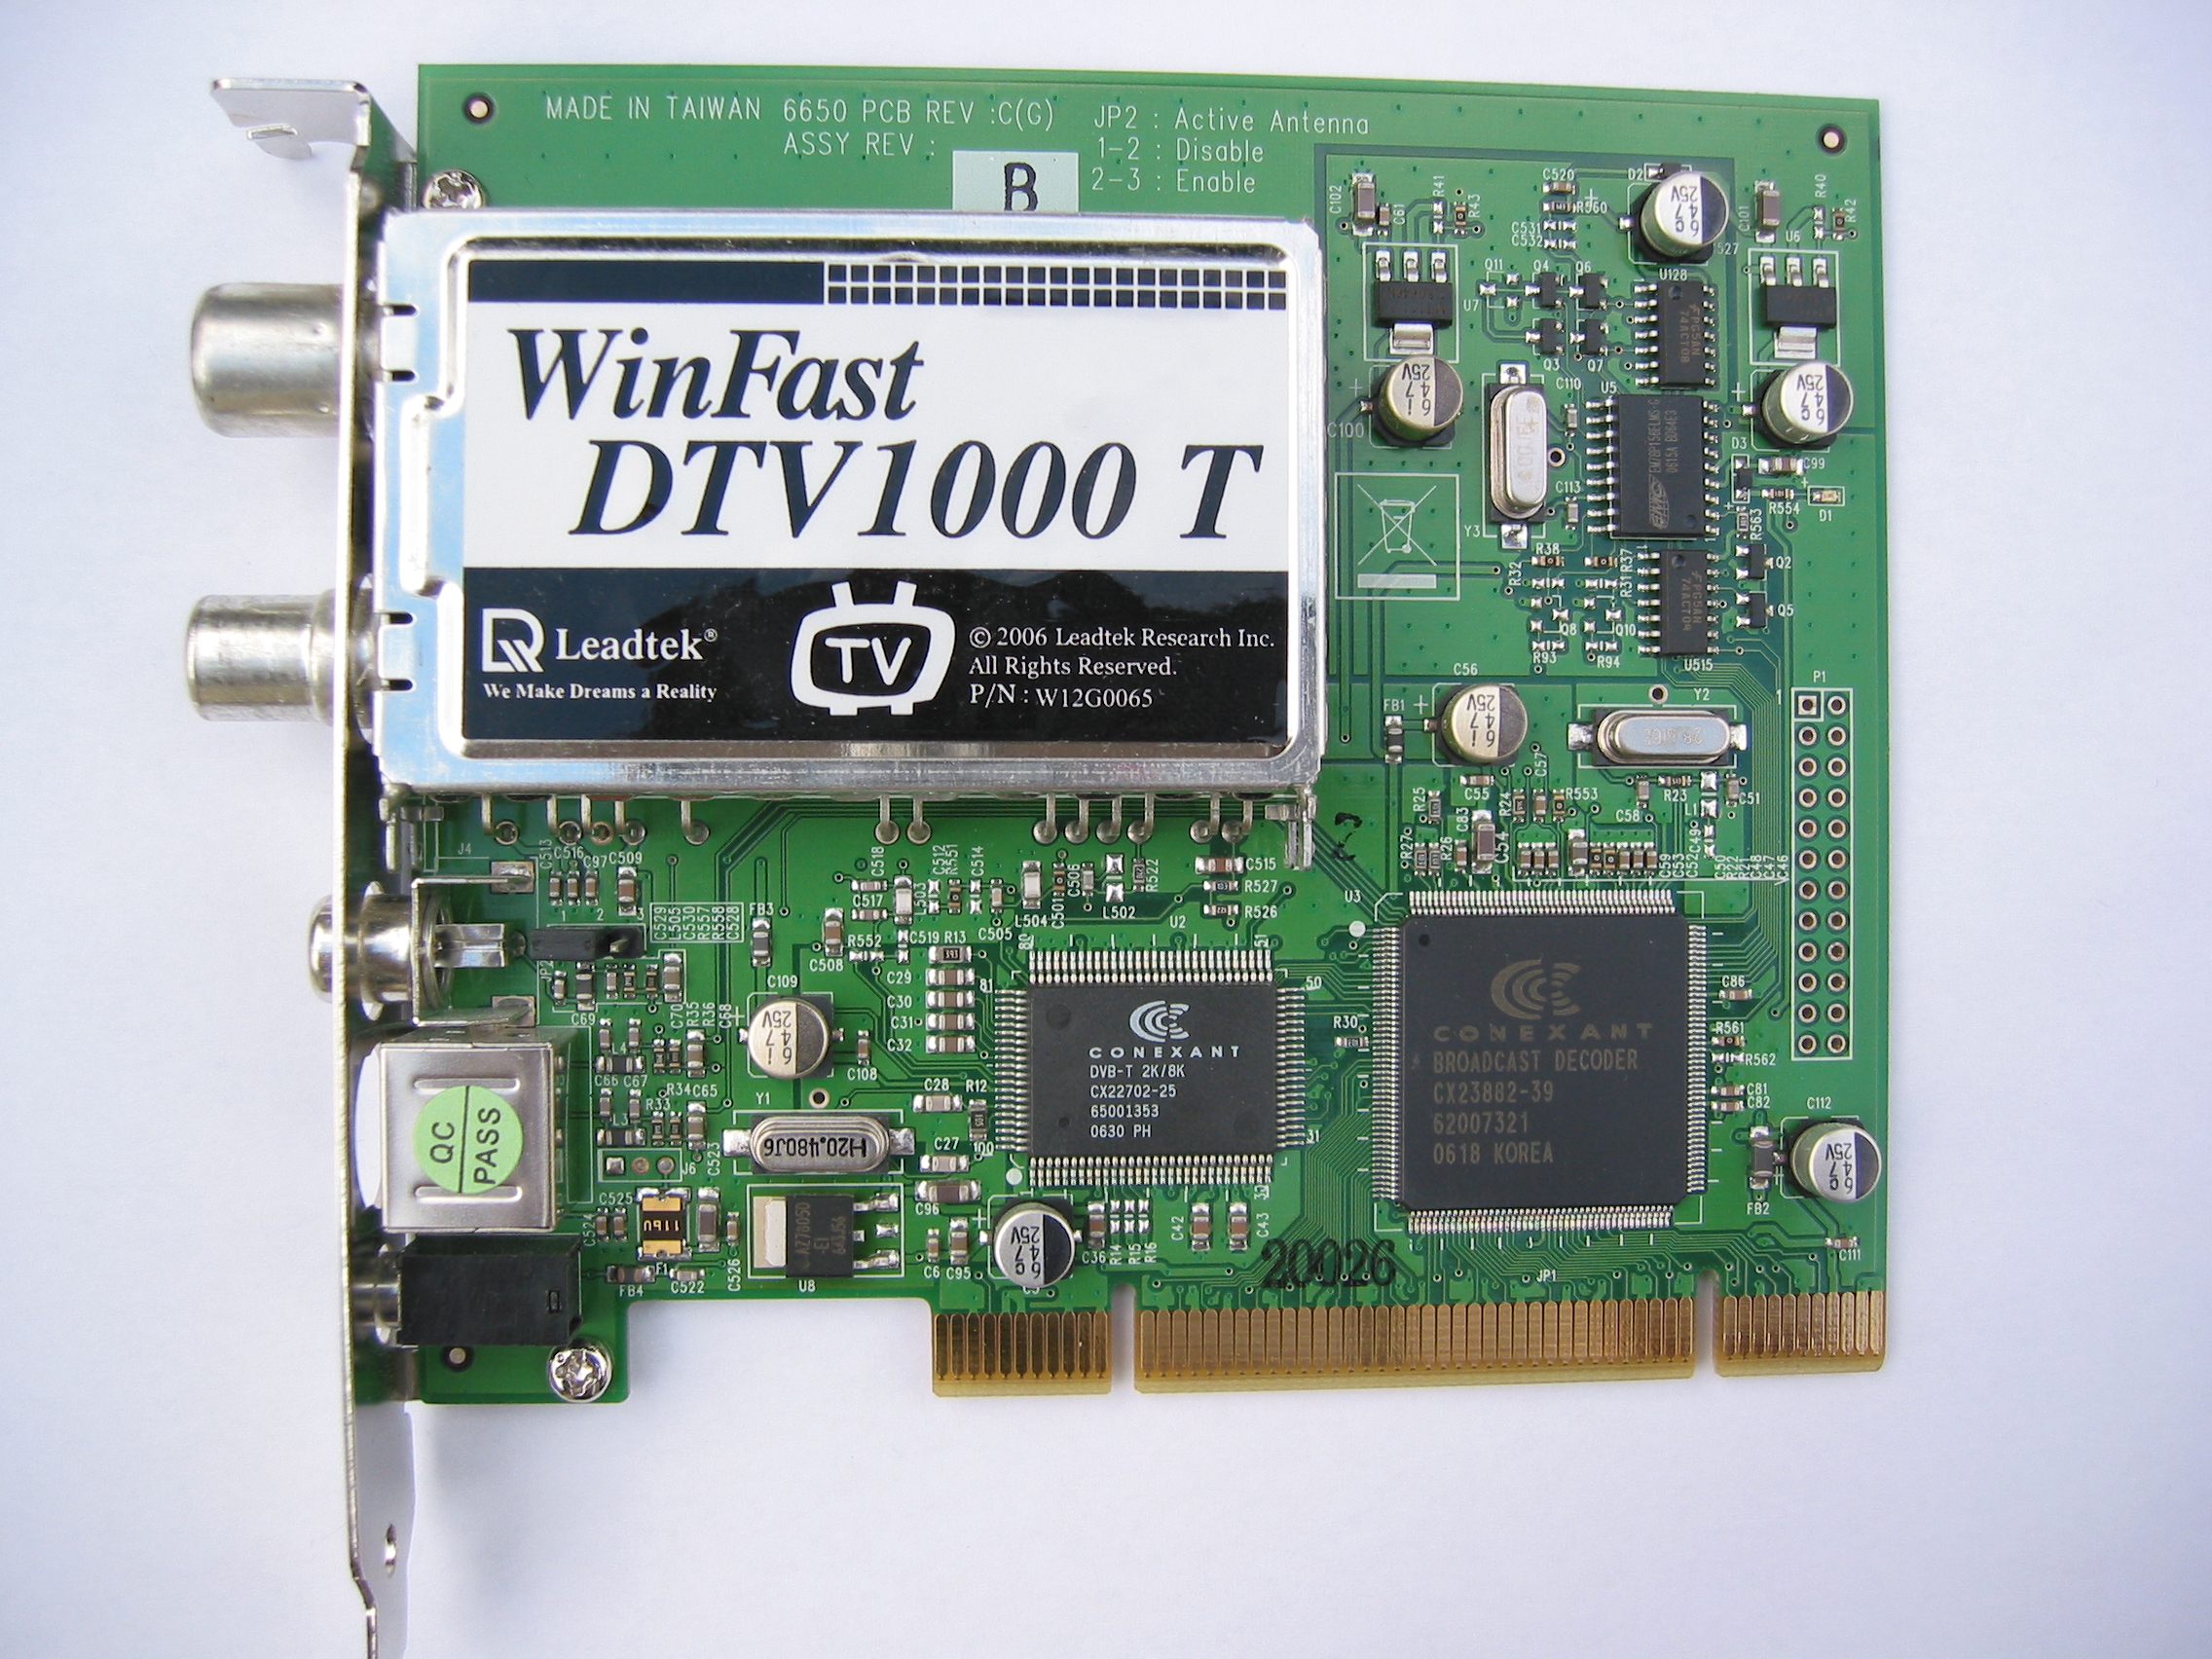 LeadTek WinFast DTV1000T (PCB top)